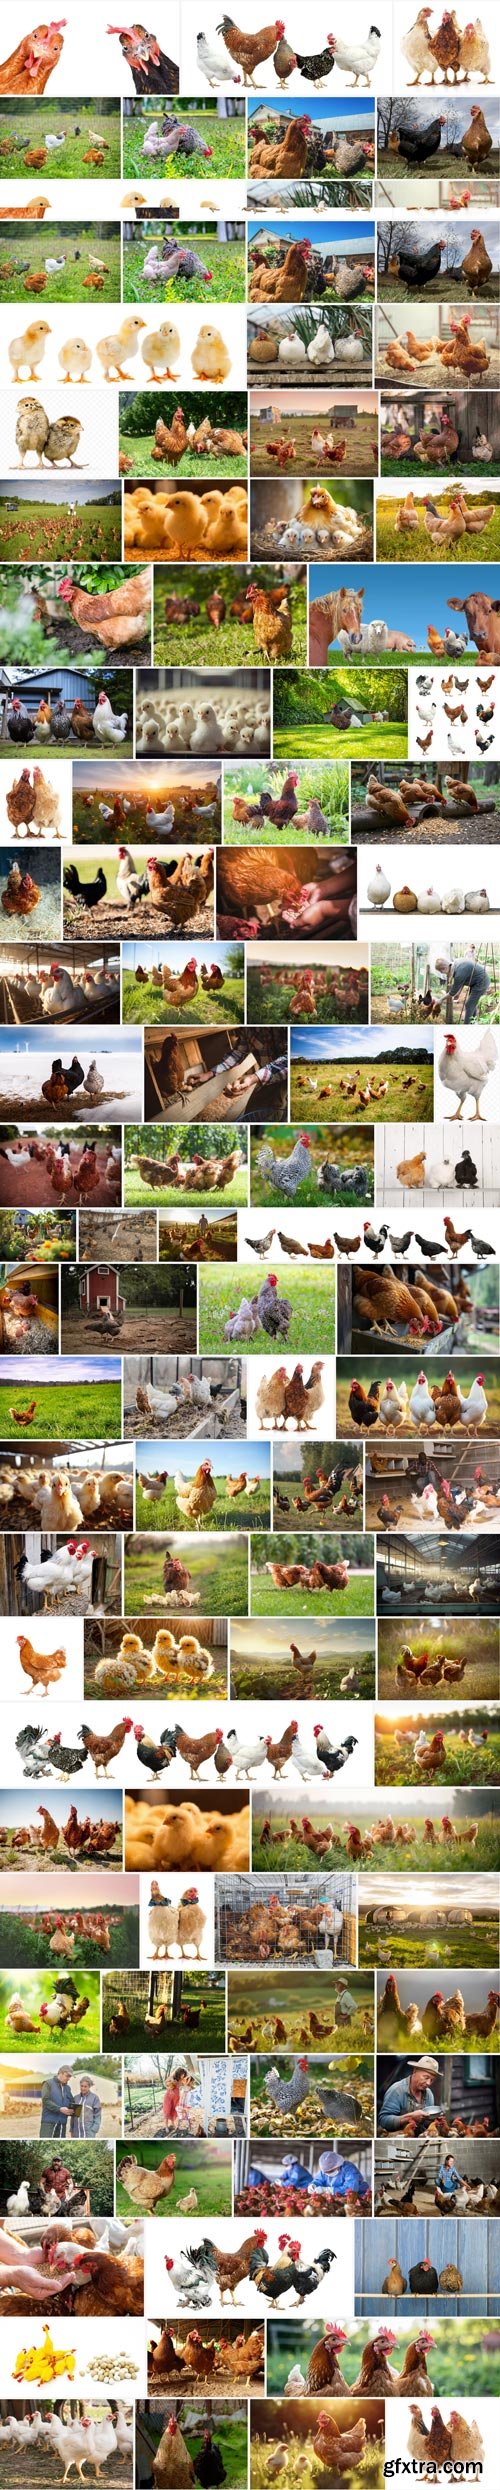 Amazing Photos, Chickens 100xJPEG